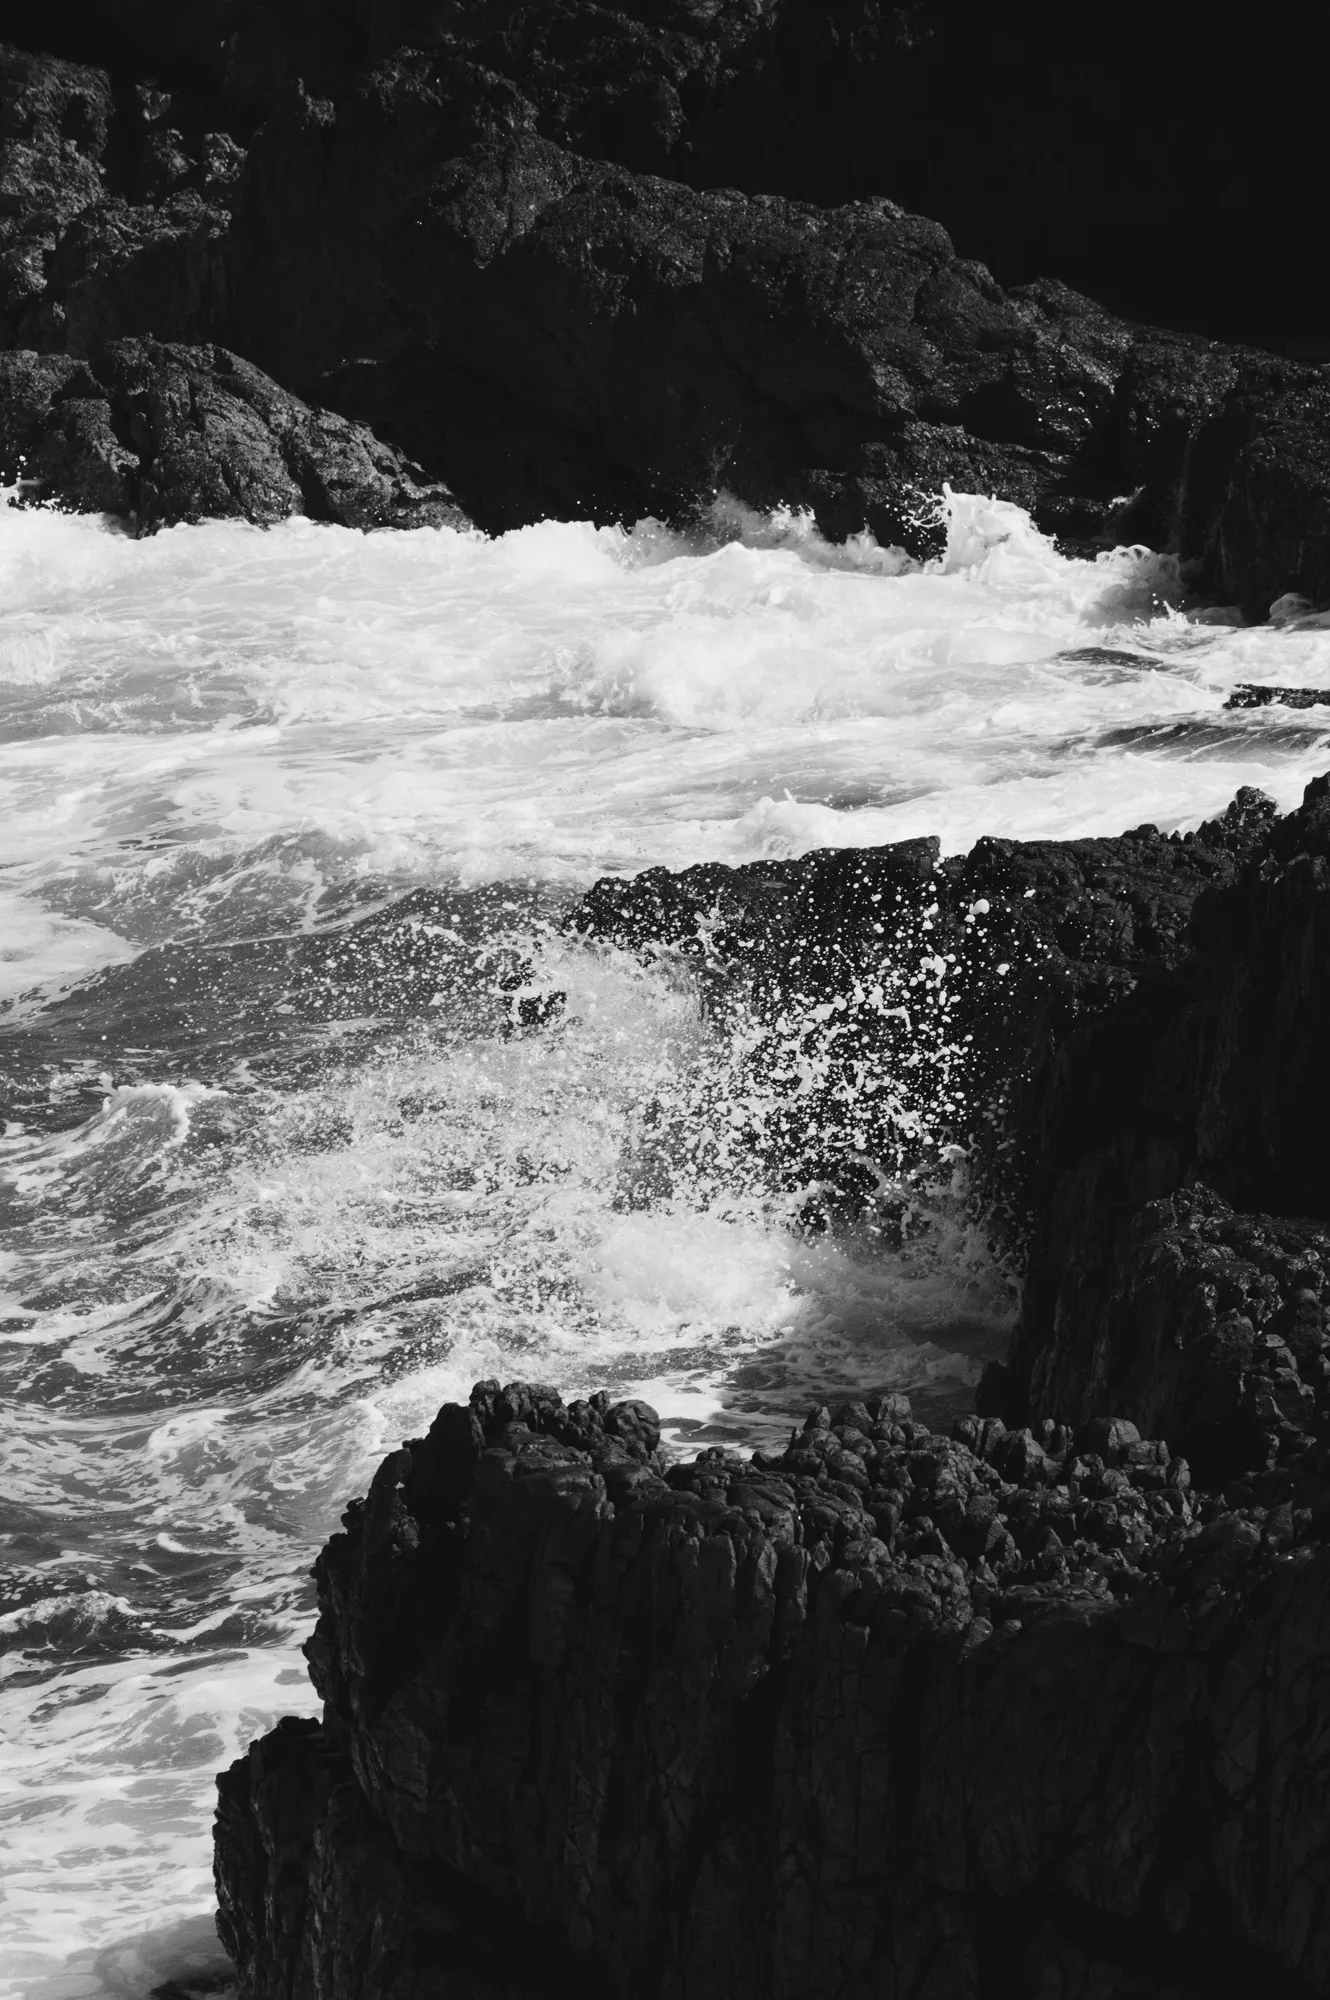 2018-12-25 - Cape Town - Waves splashing into rocks